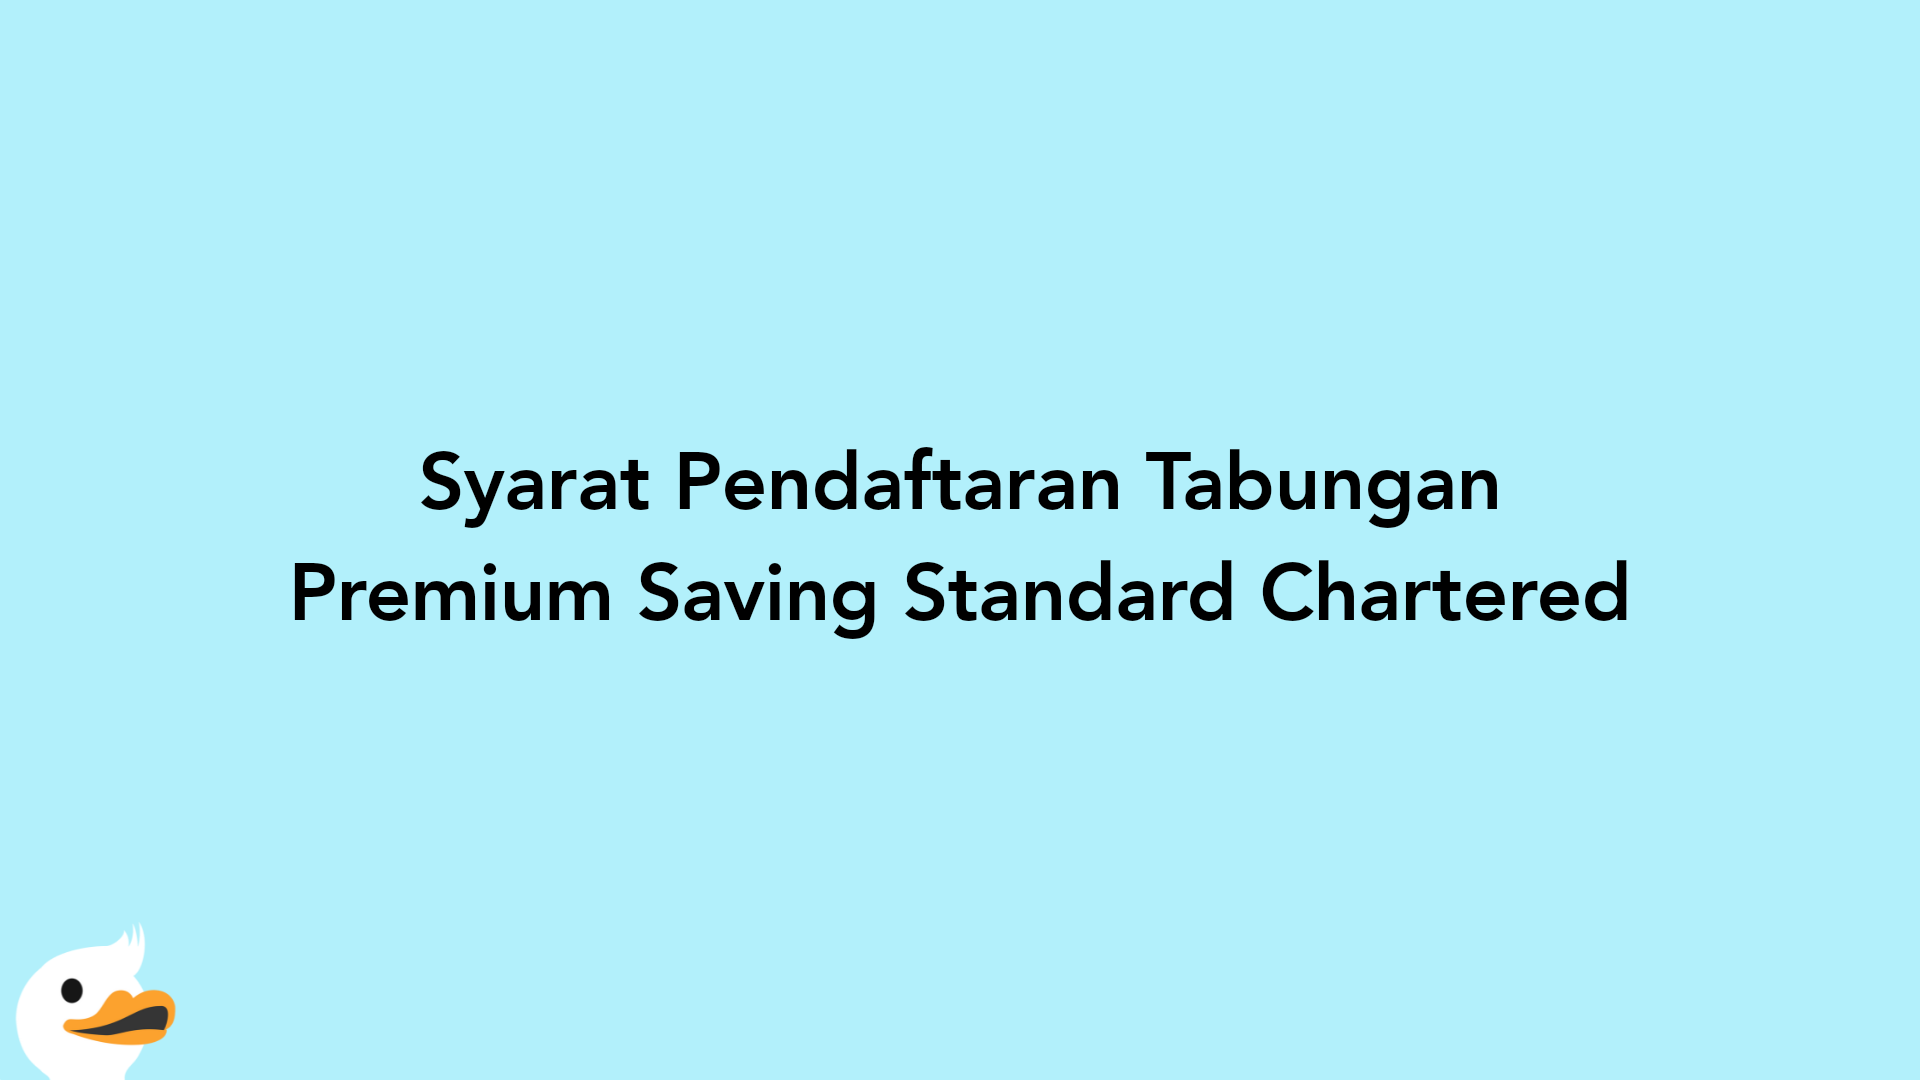 Syarat Pendaftaran Tabungan Premium Saving Standard Chartered